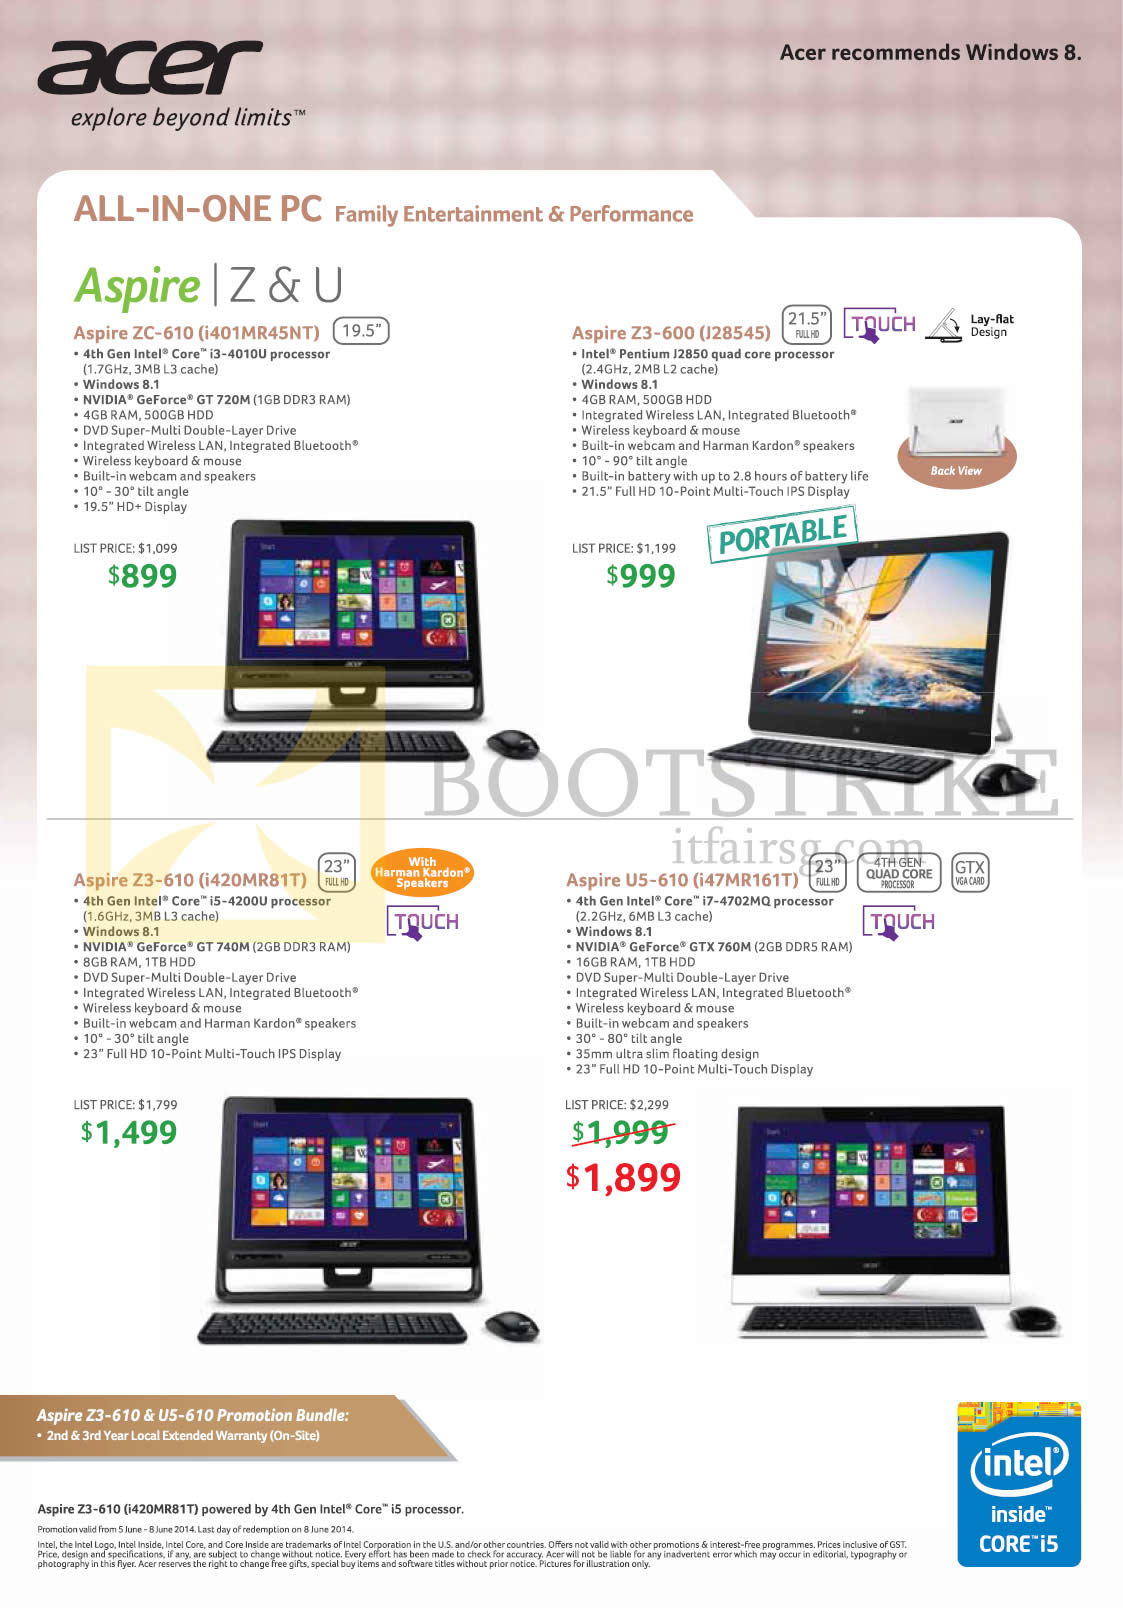 PC SHOW 2014 price list image brochure of Acer AIO Desktop PCs Aspire ZC-610, Z3-600, Z3-610, U5-610